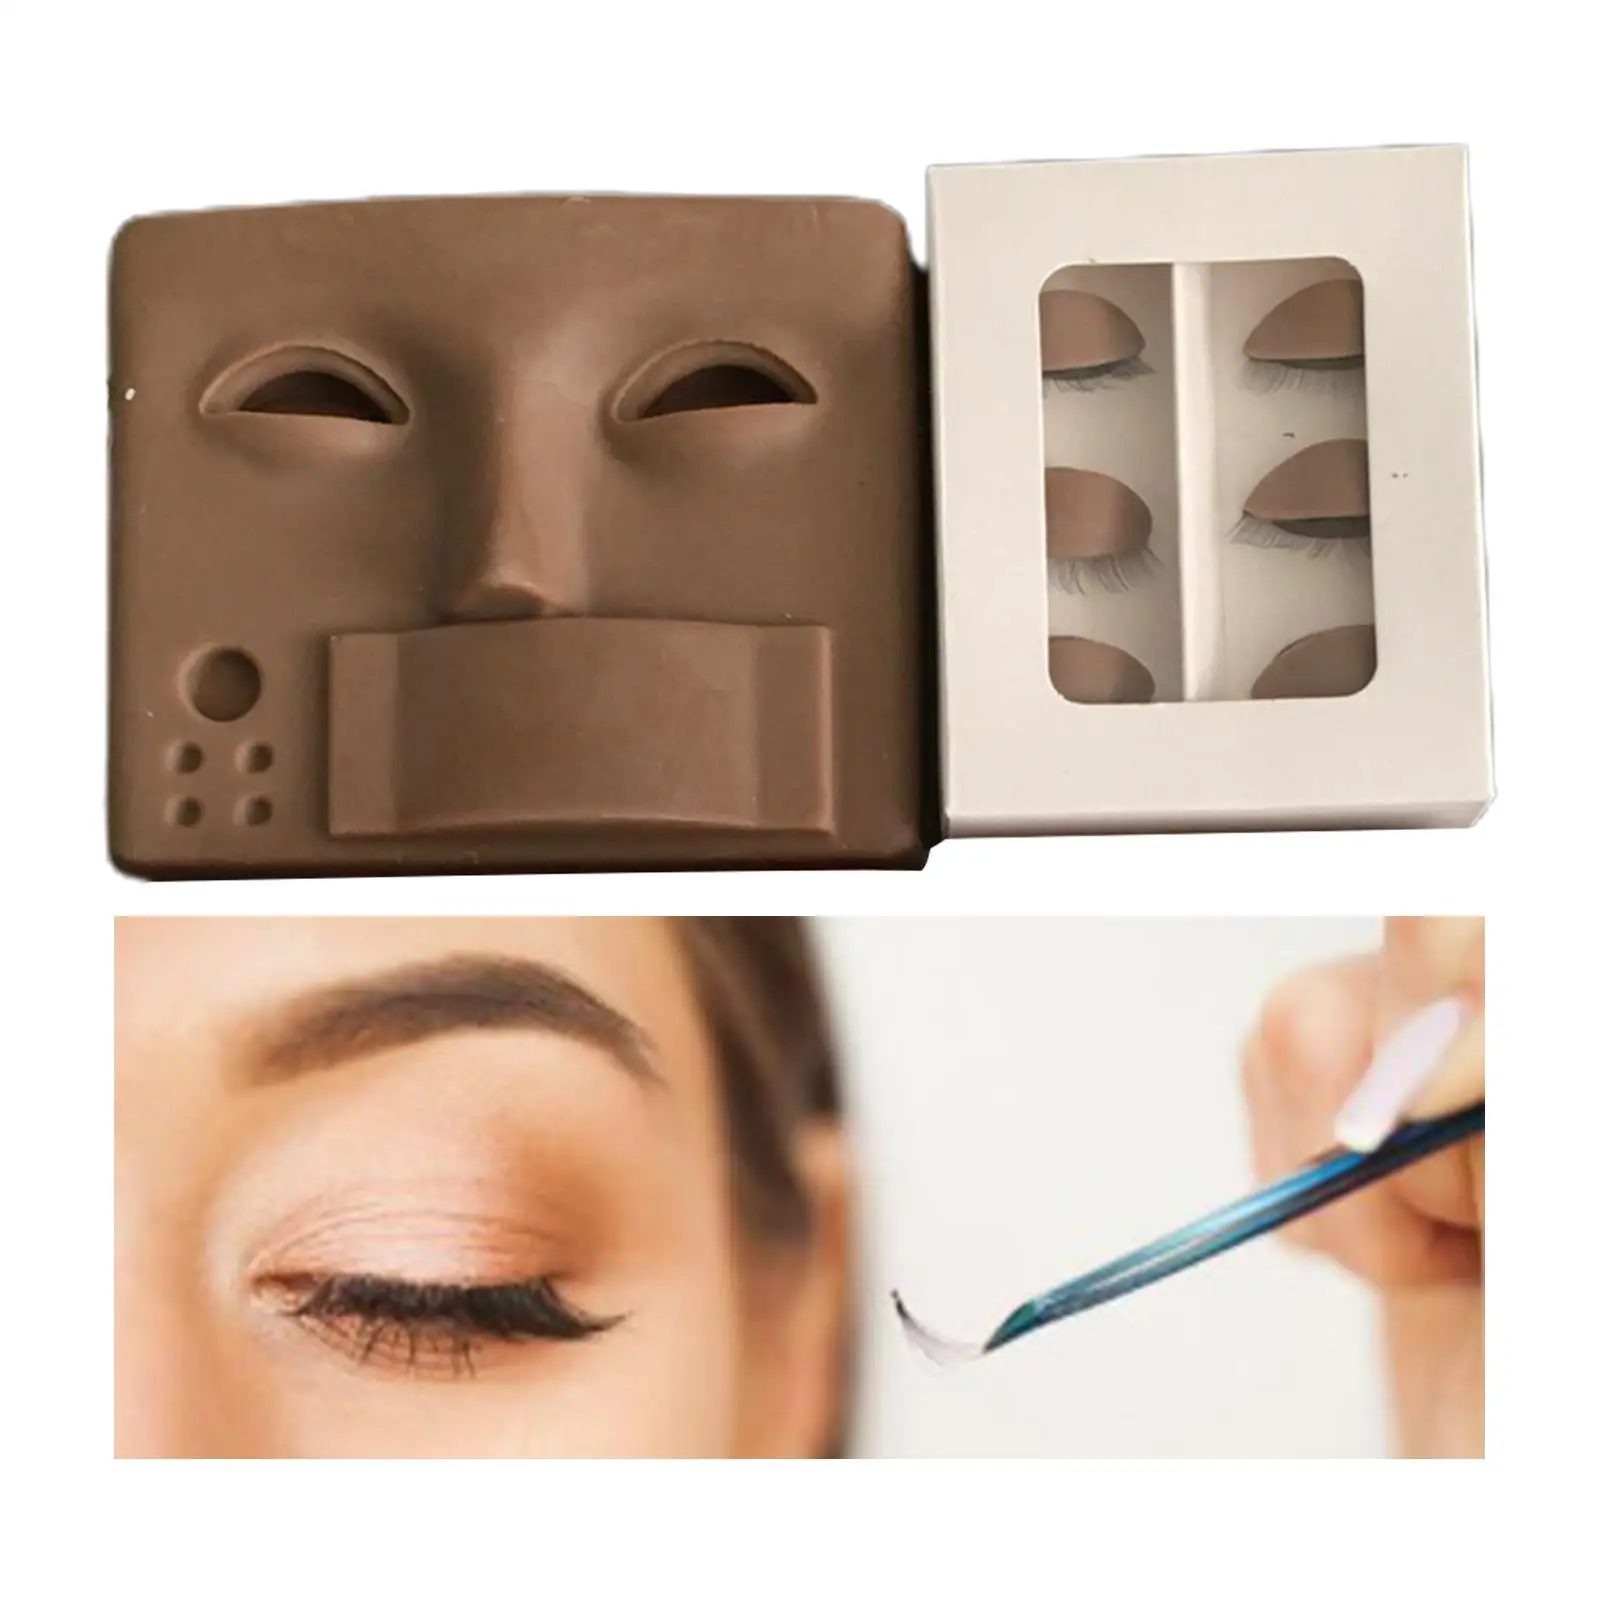 Practice Eyelash Extension Head Model with Lashes Holder False Eyelashes Extension Eyealsh Salon Beauty Model Kit for Starter